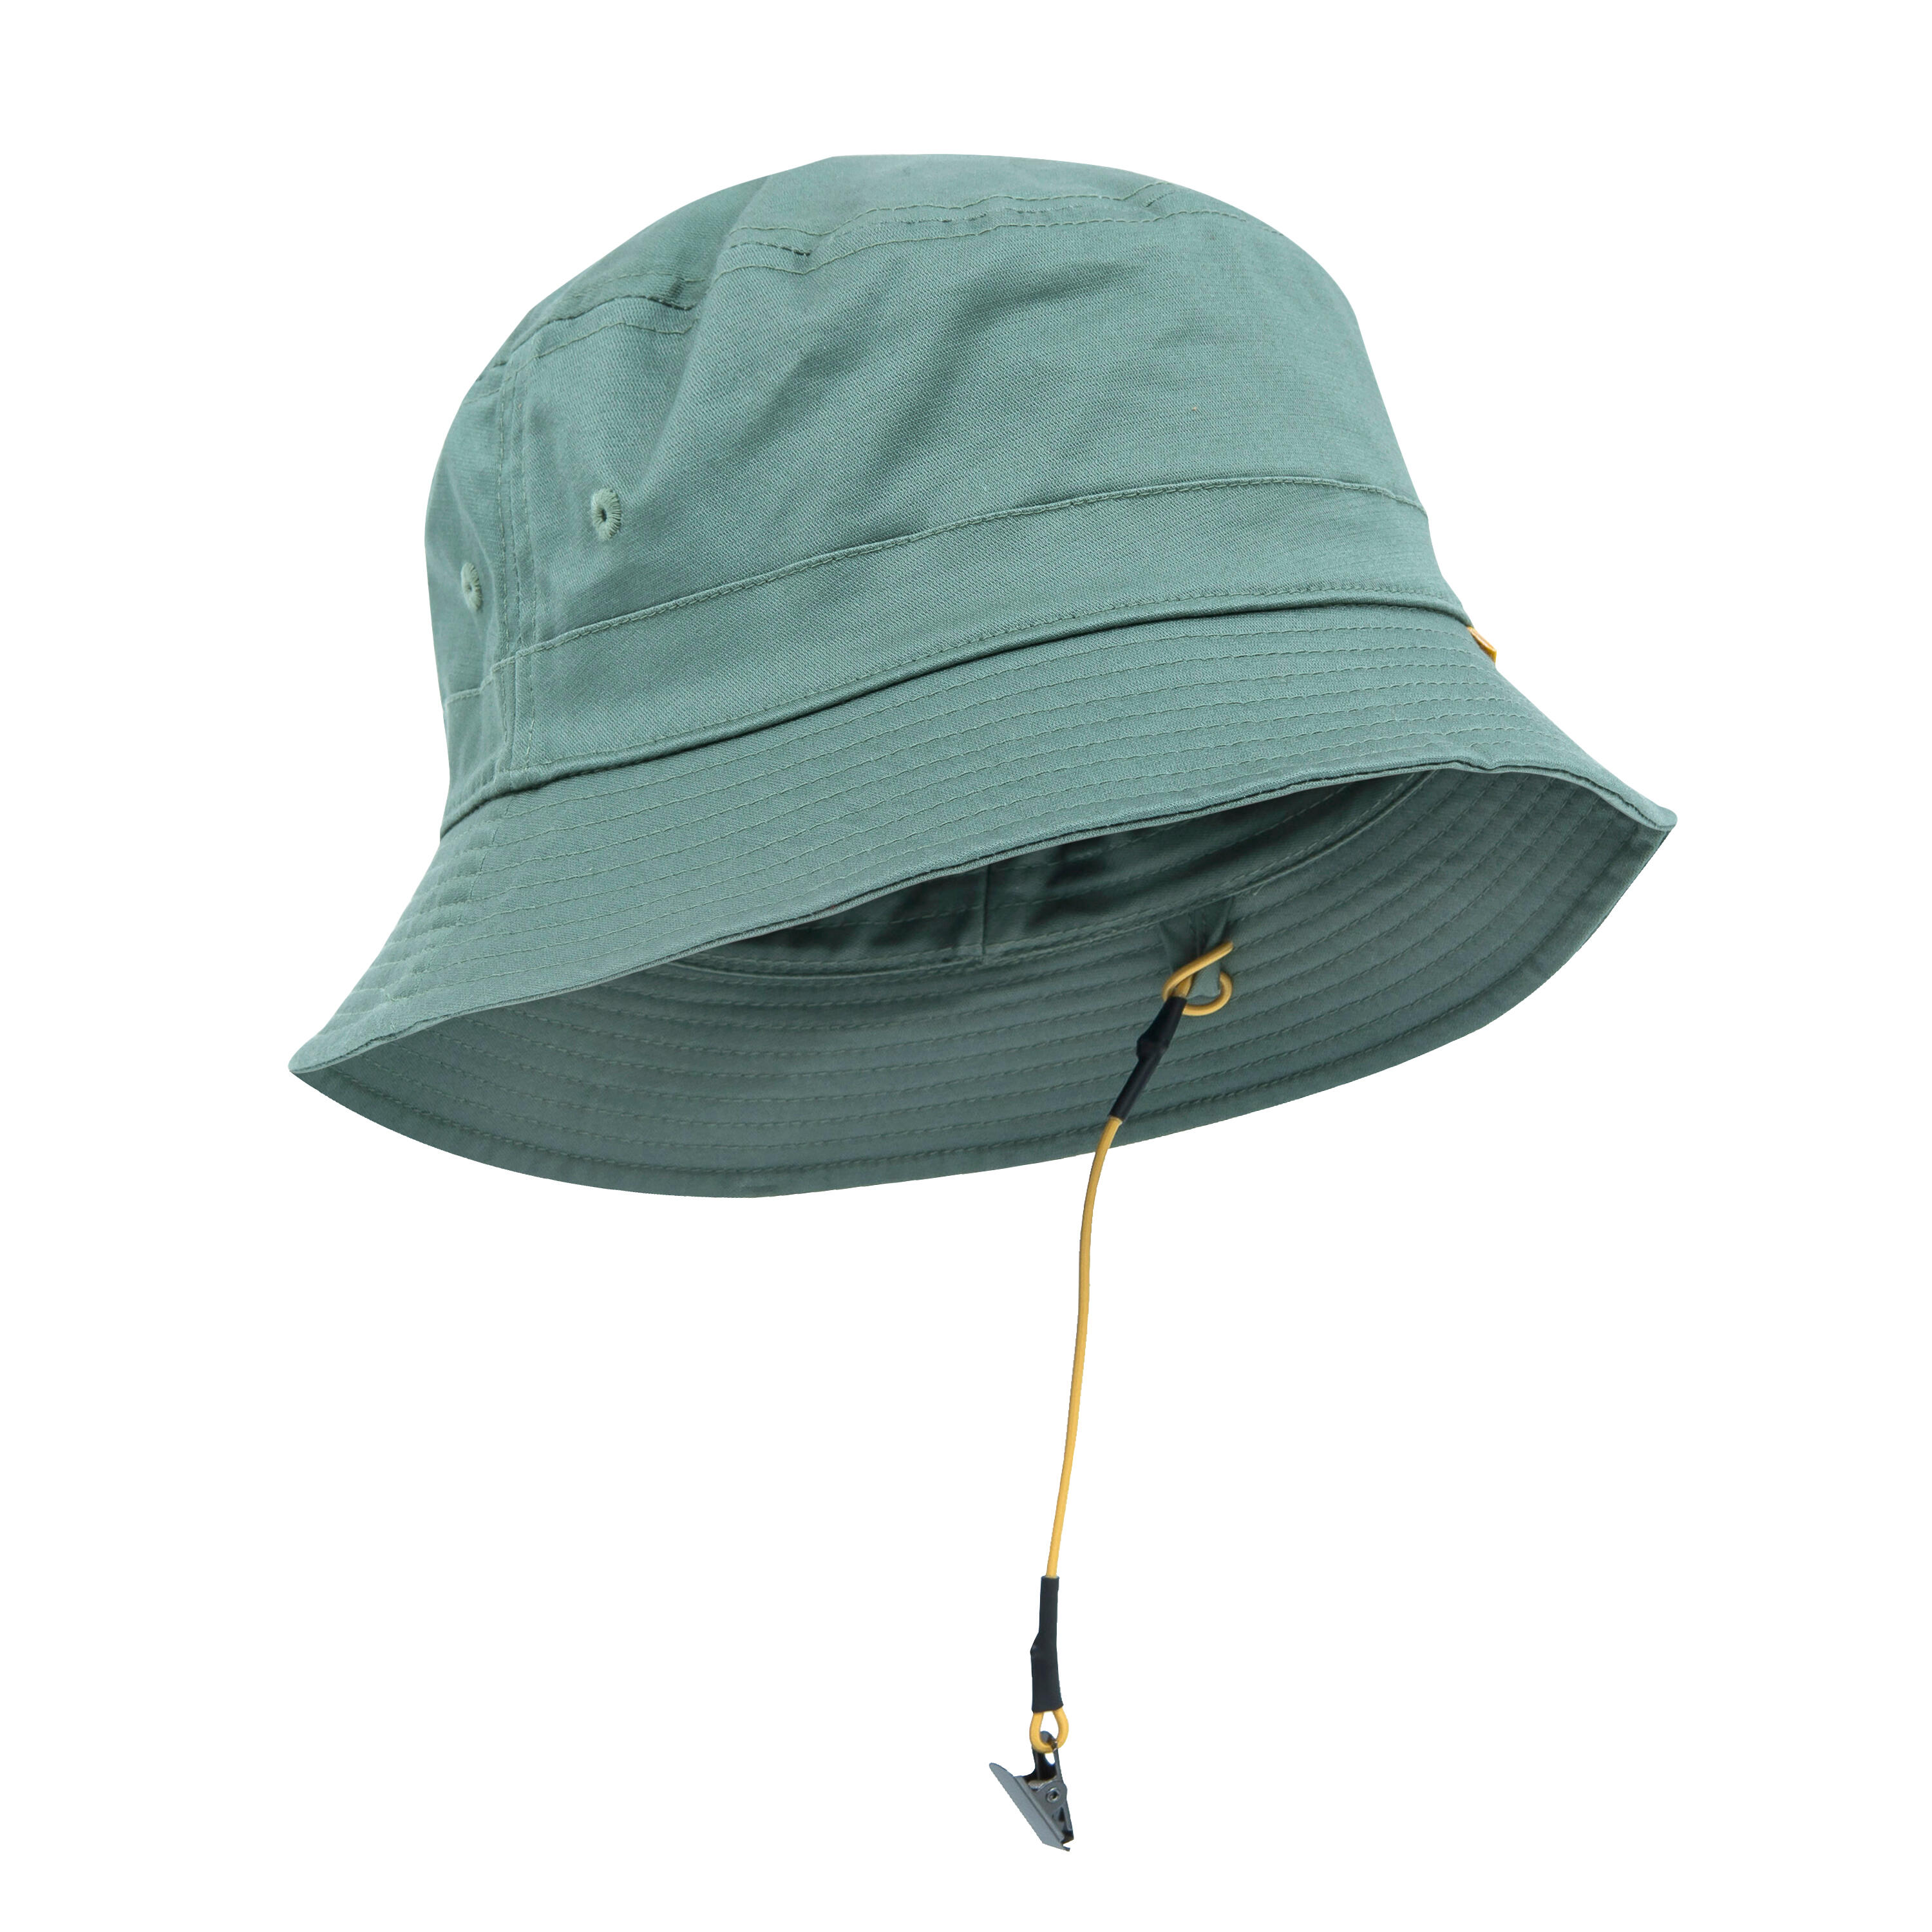 Adults’ Sailing boat hat 100 Khaki cotton - 56cm By TRIBORD | Decathlon